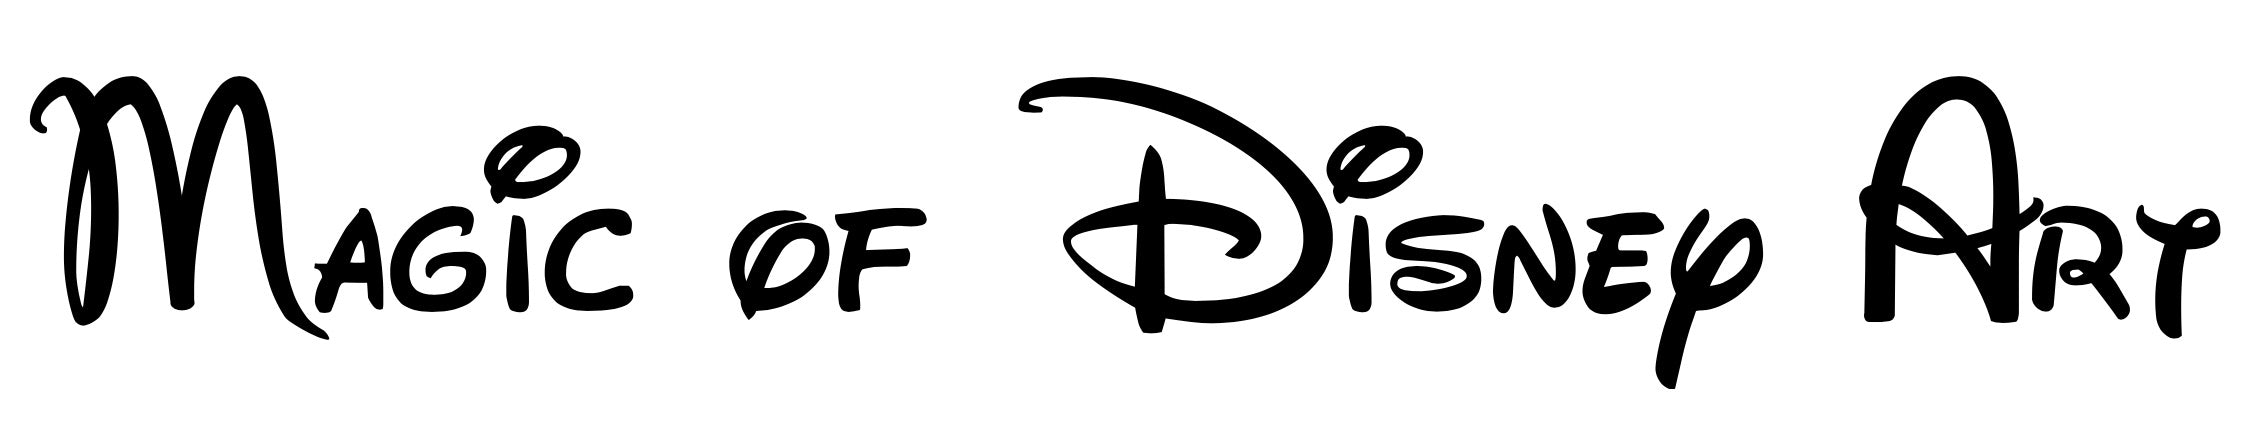 The Magic of Disney Art